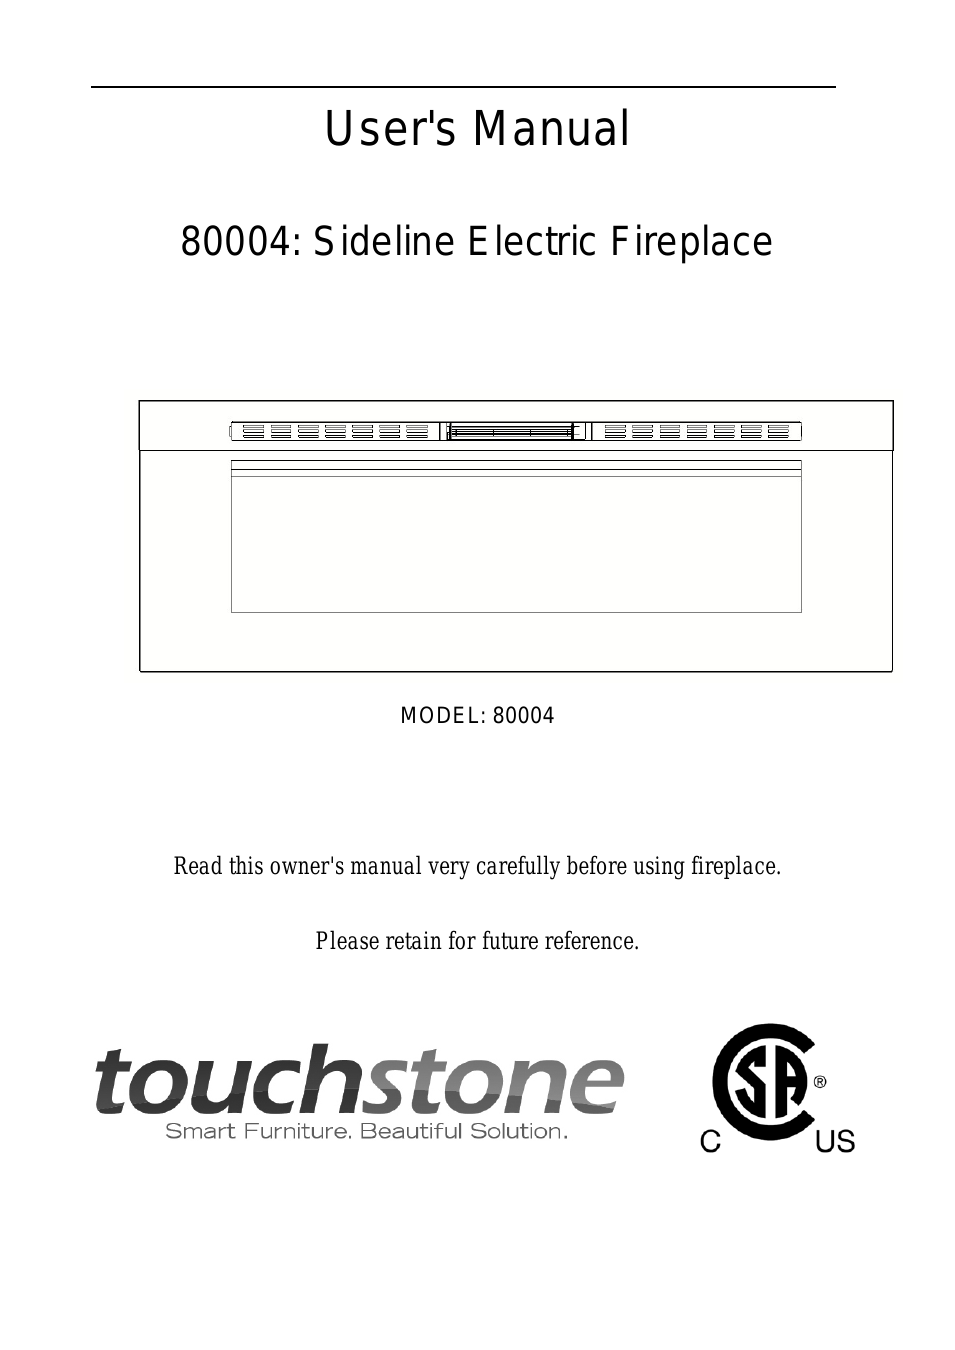 80004 Sideline Fireplace